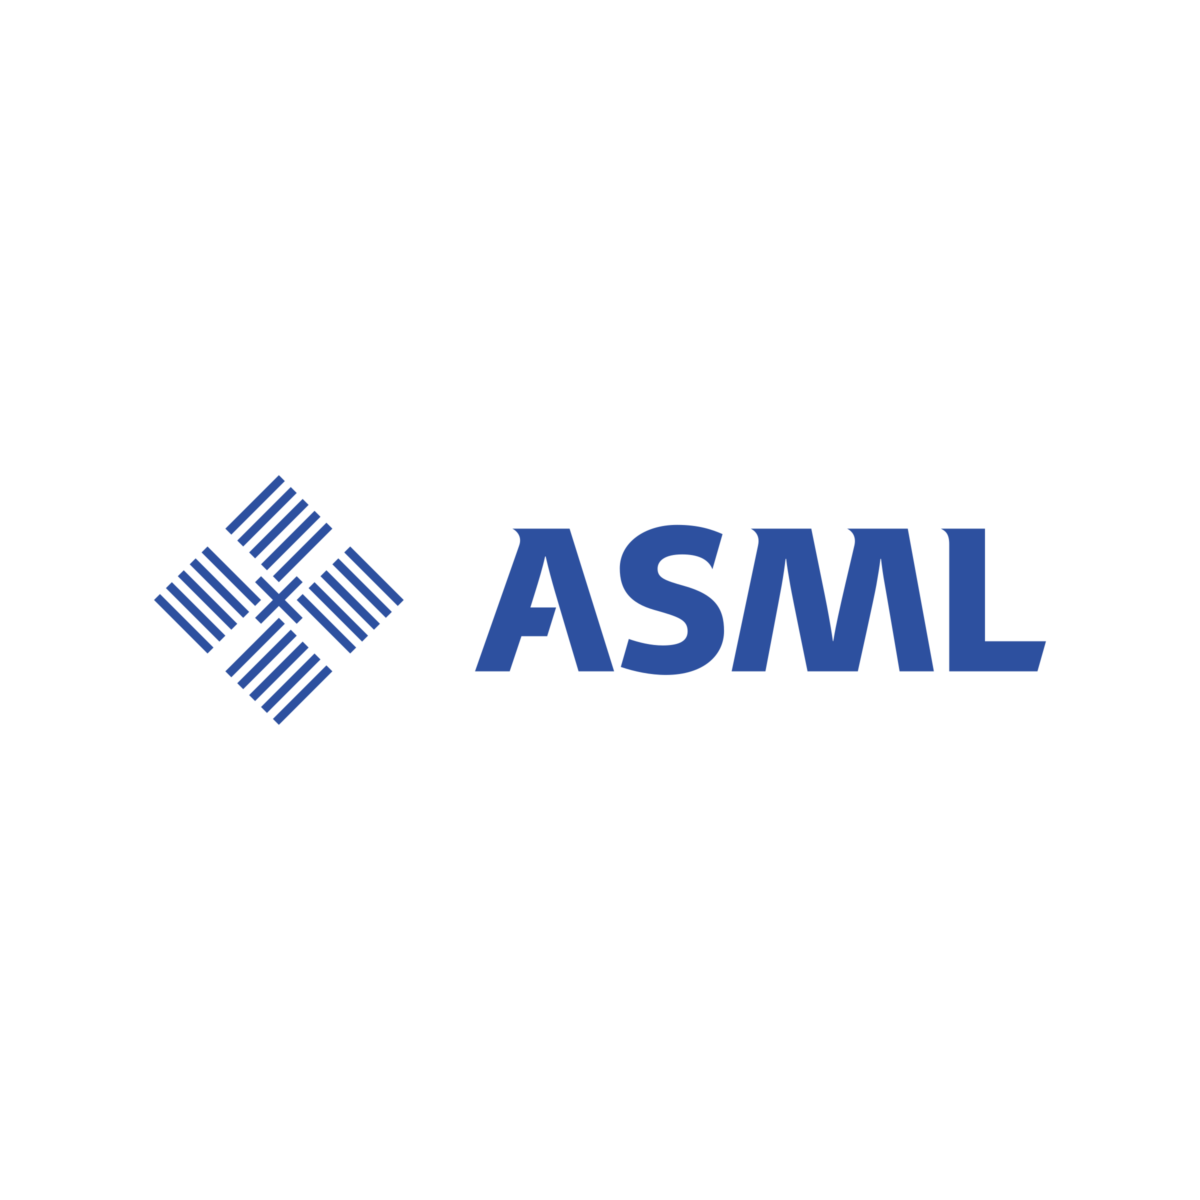 asml-logo-png.png